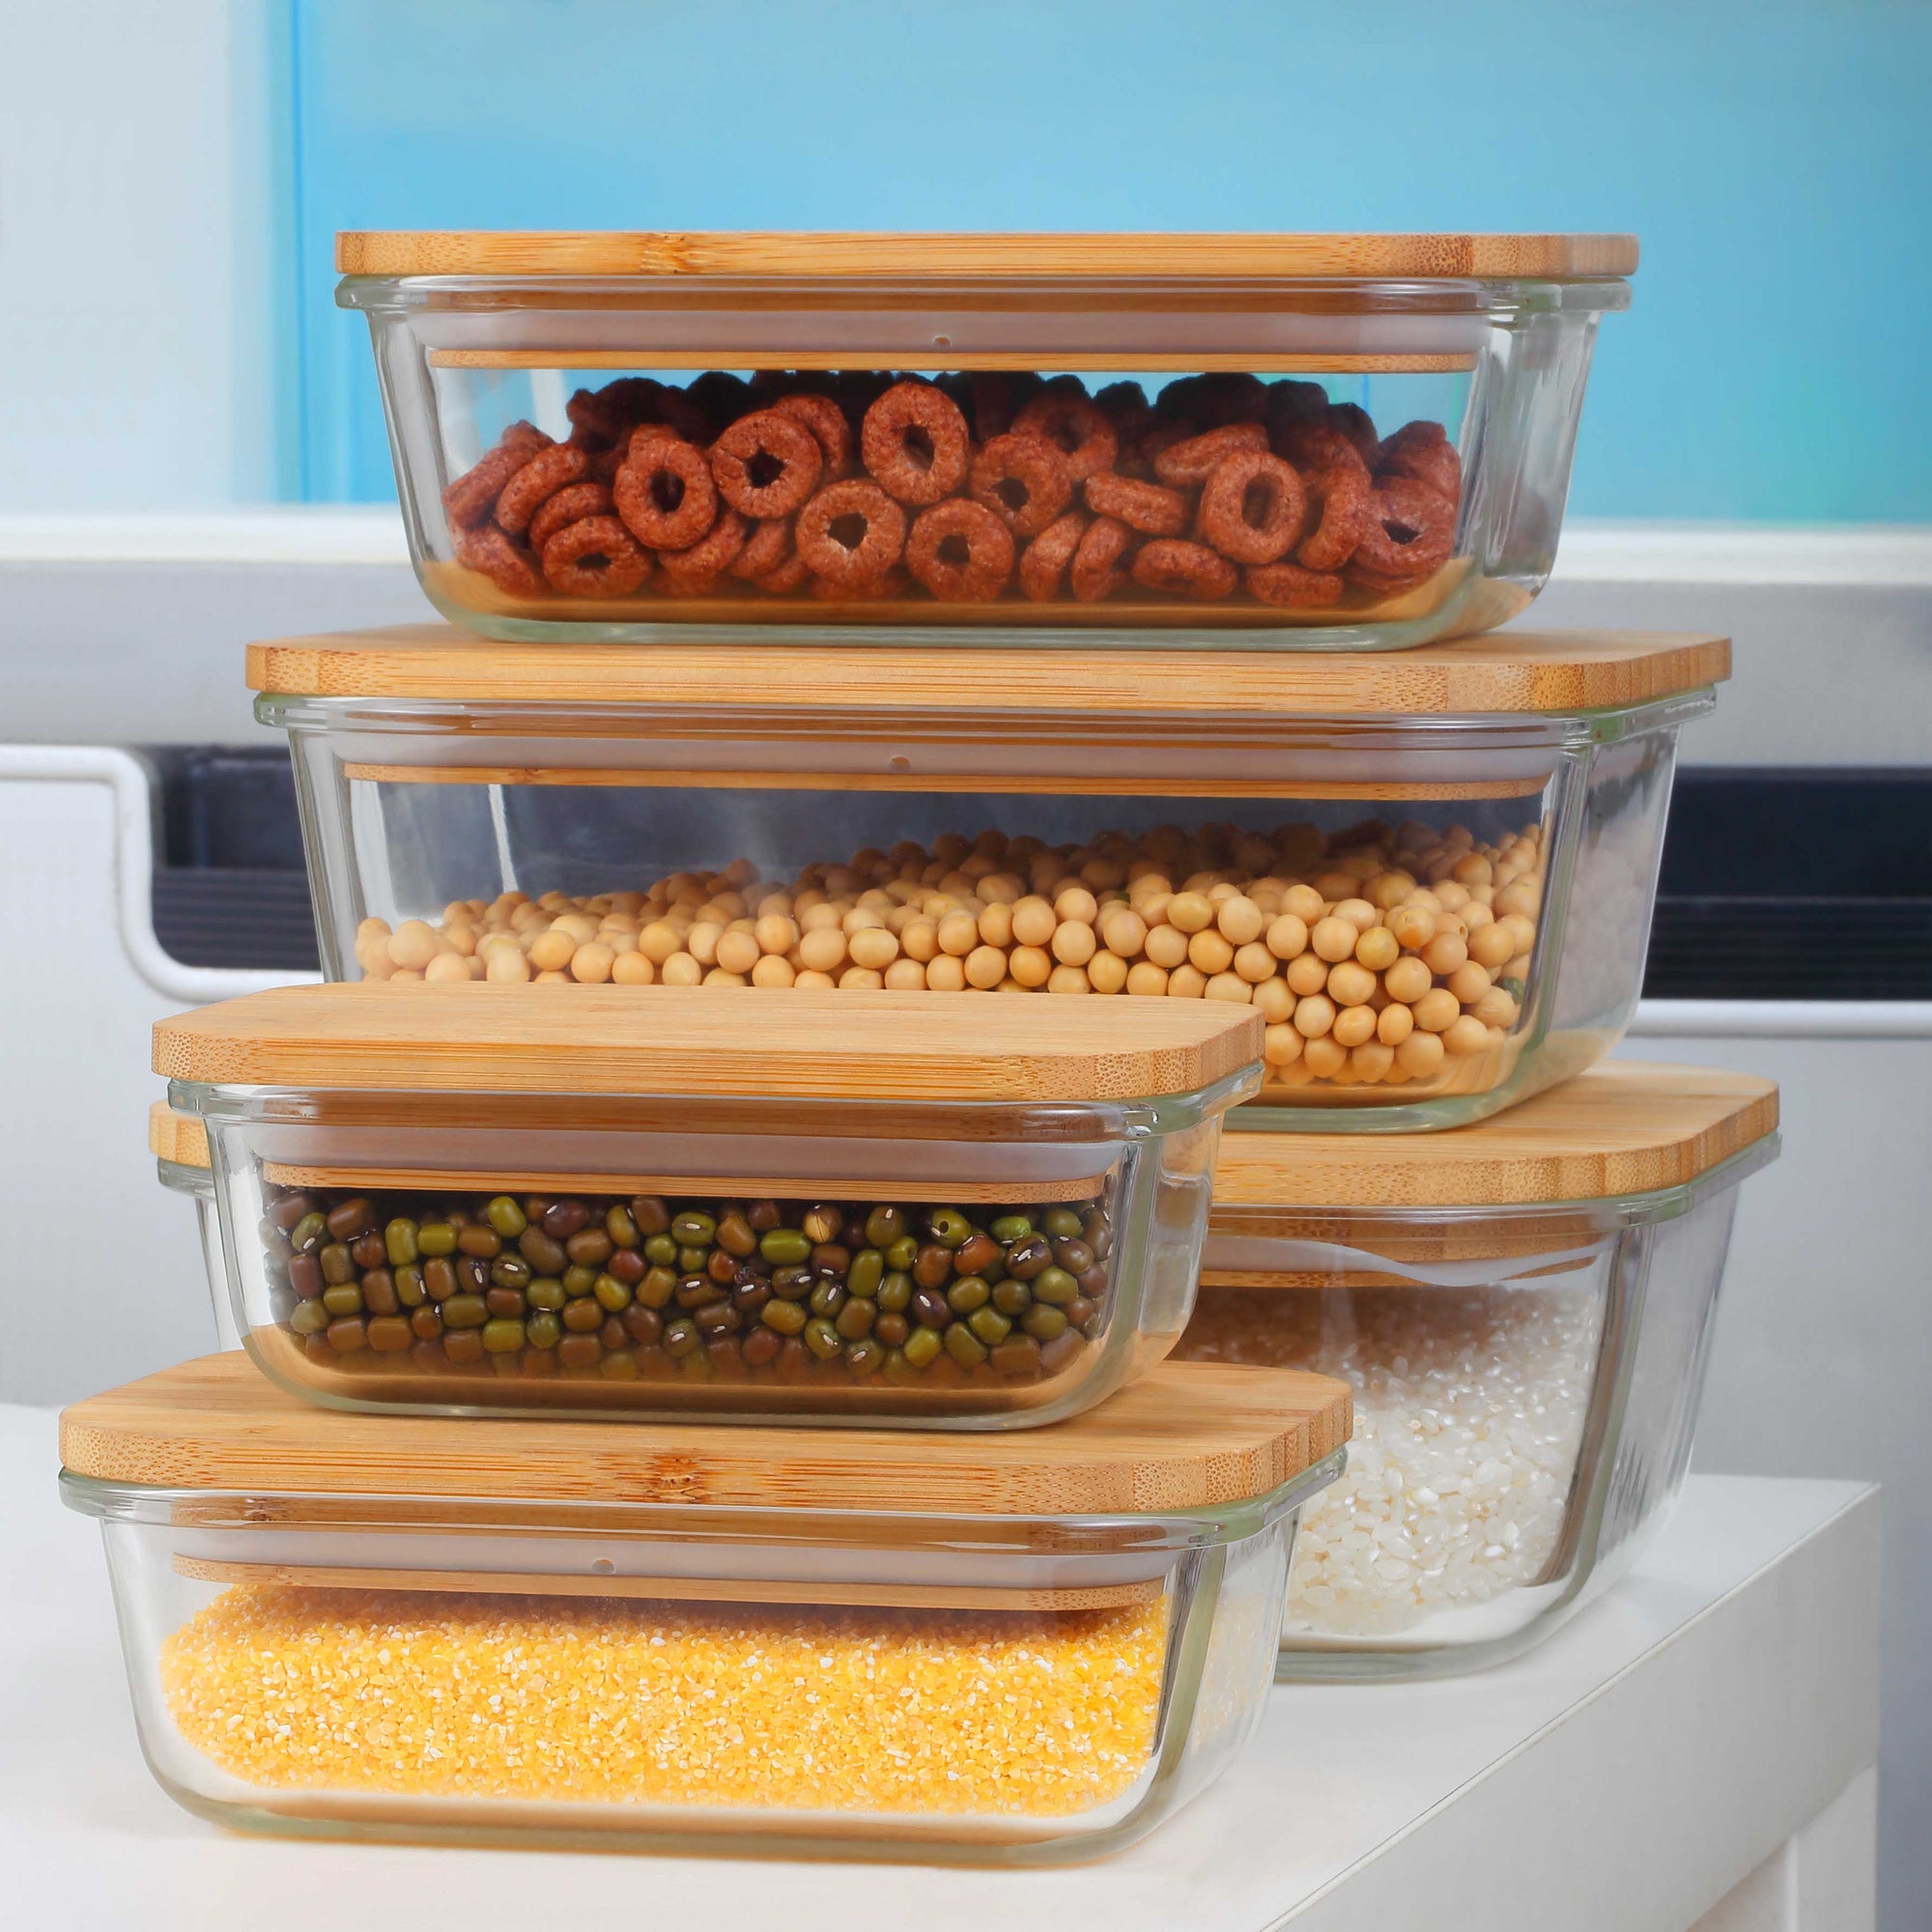 Nummyware Plastic-Free Food Storage